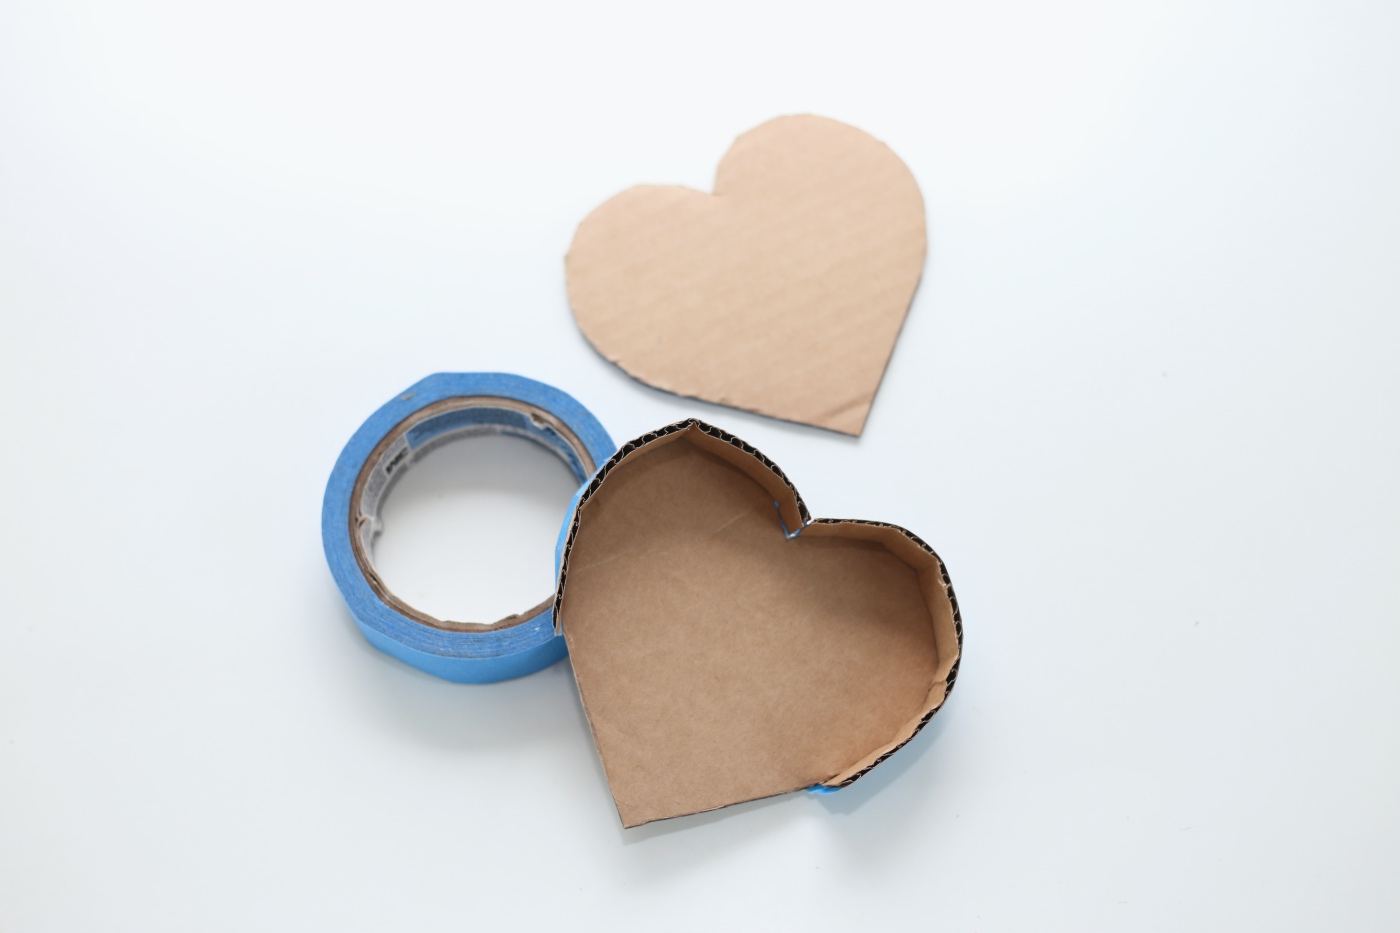 cardboard and tape to make a diy heart shaped pinata pop shop america